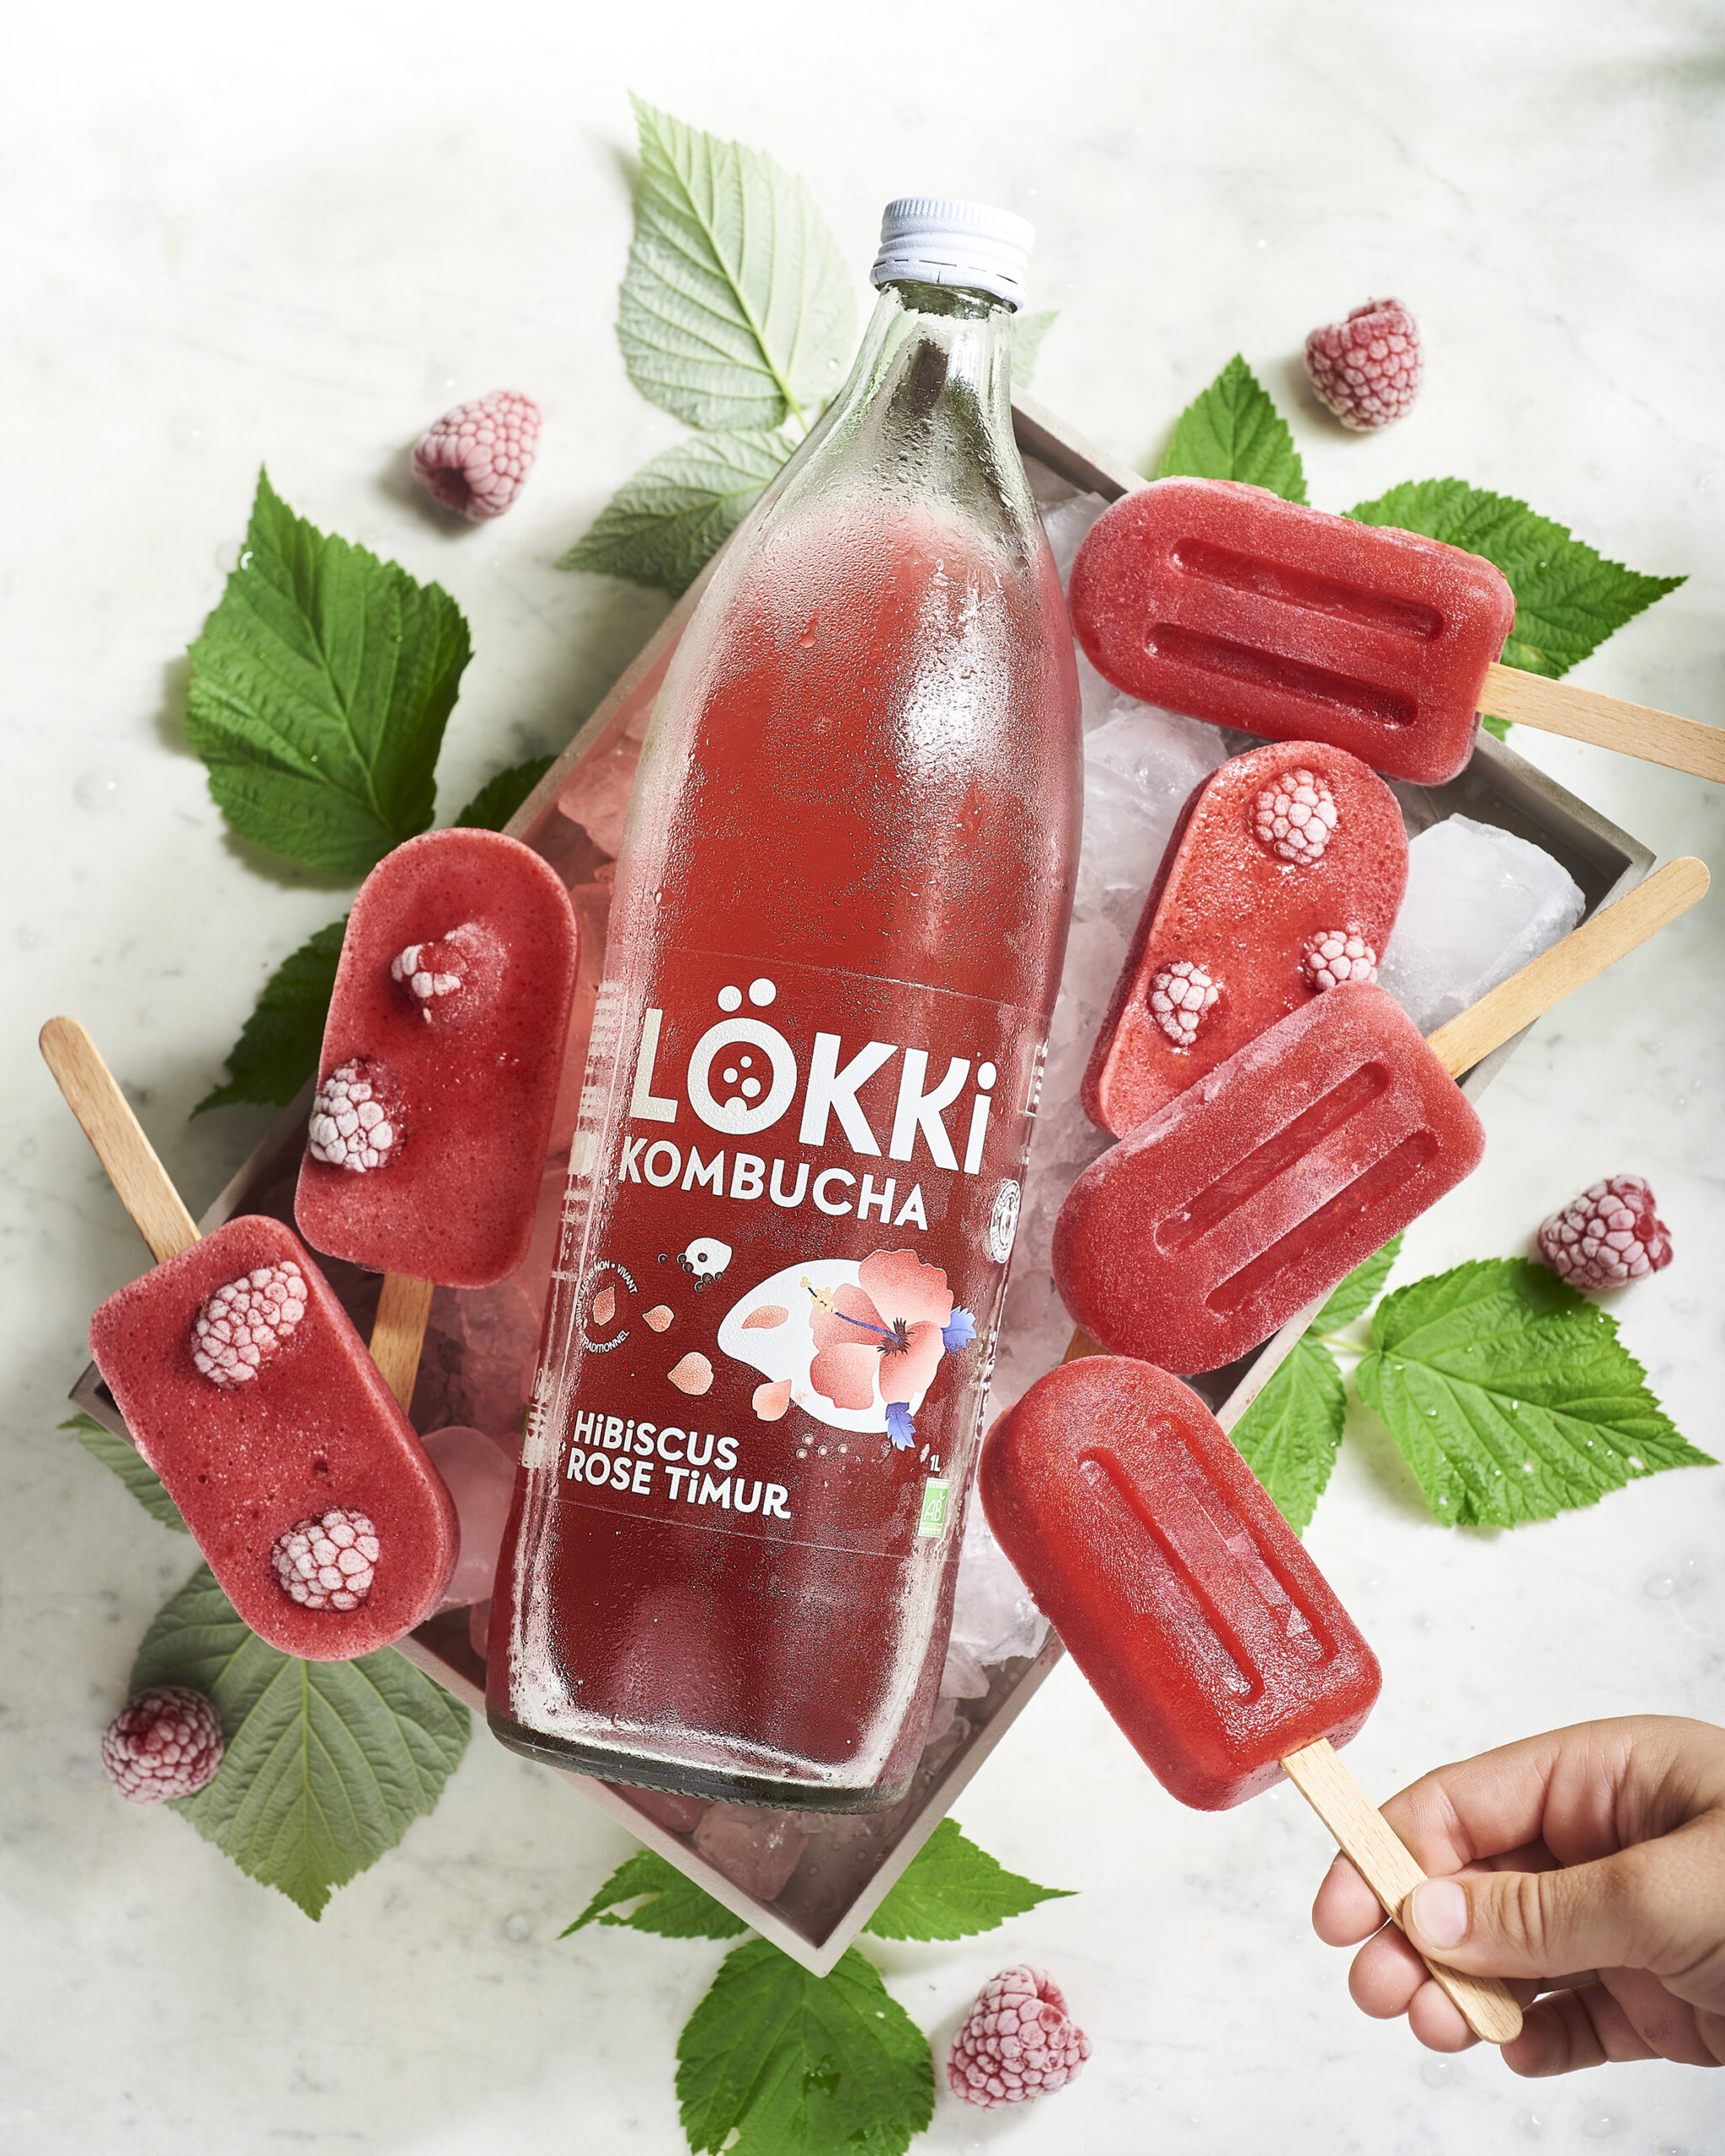 Lökki Kombucha Hibiscus Rose Baie de Timur glace boisson fermentée